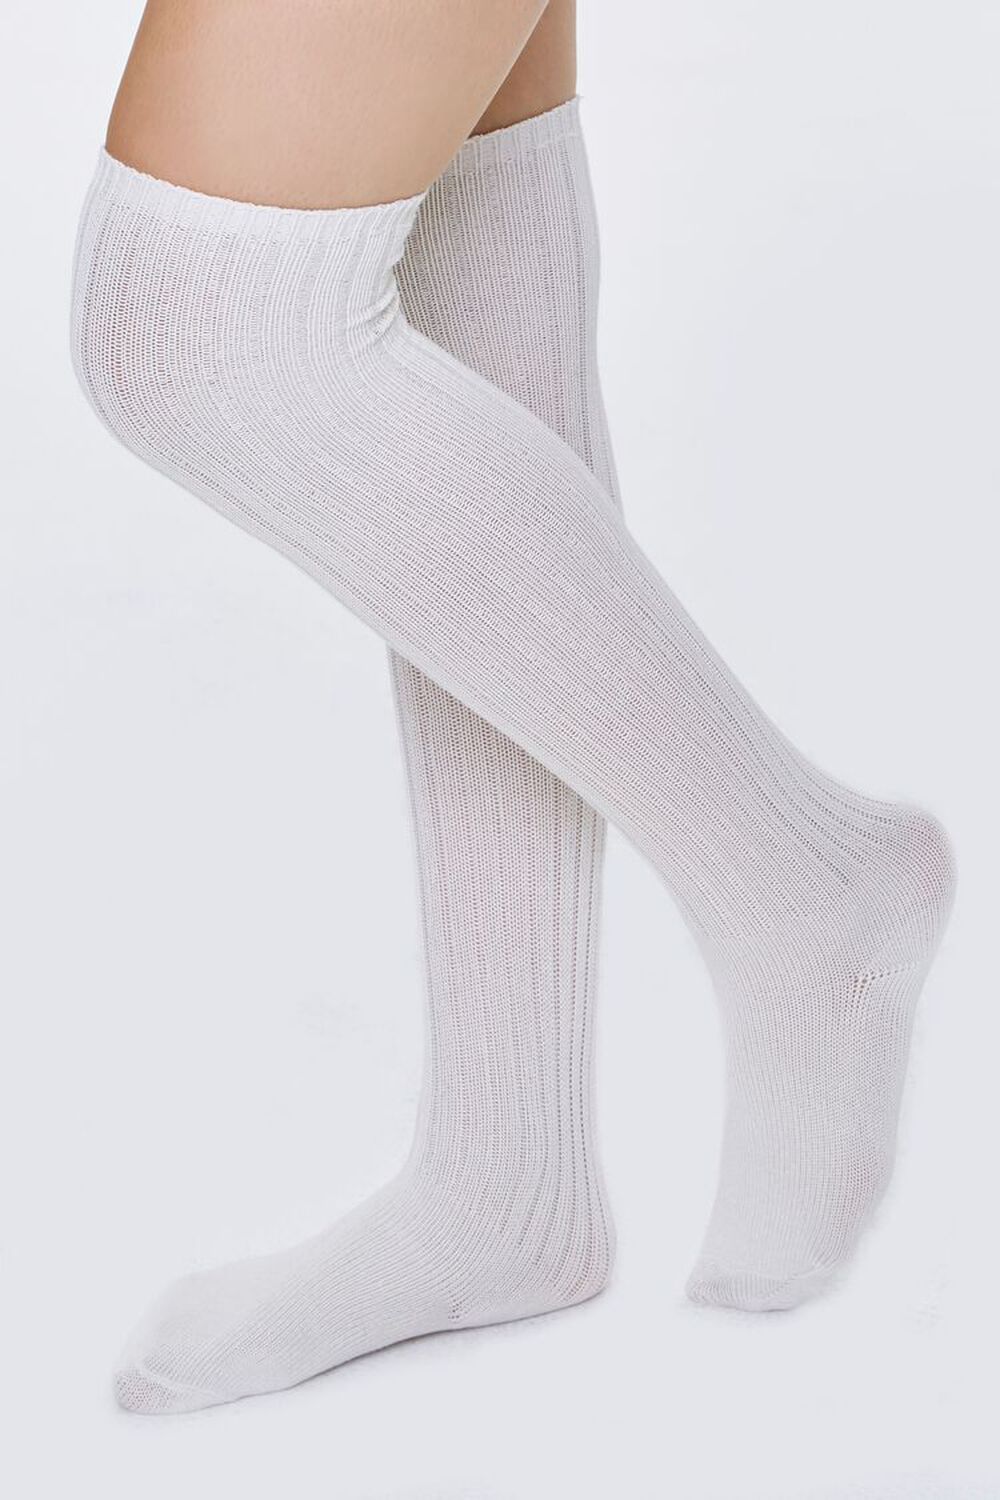 CREAM Ribbed Over-the-Knee Socks, image 1